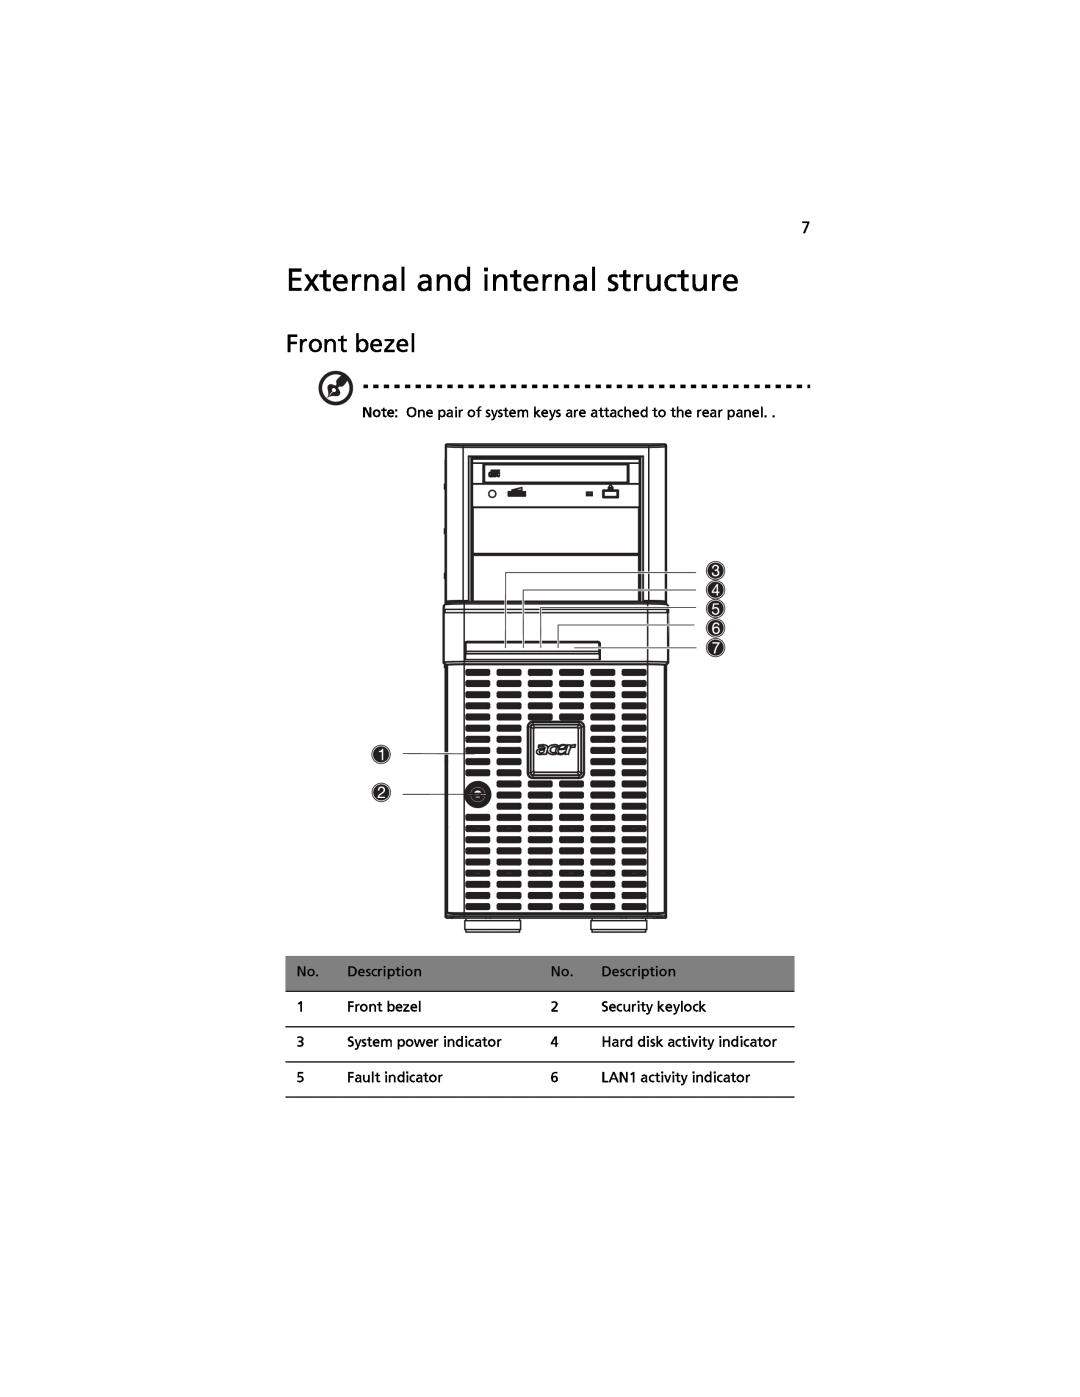 Acer G520 series manual External and internal structure, Front bezel 